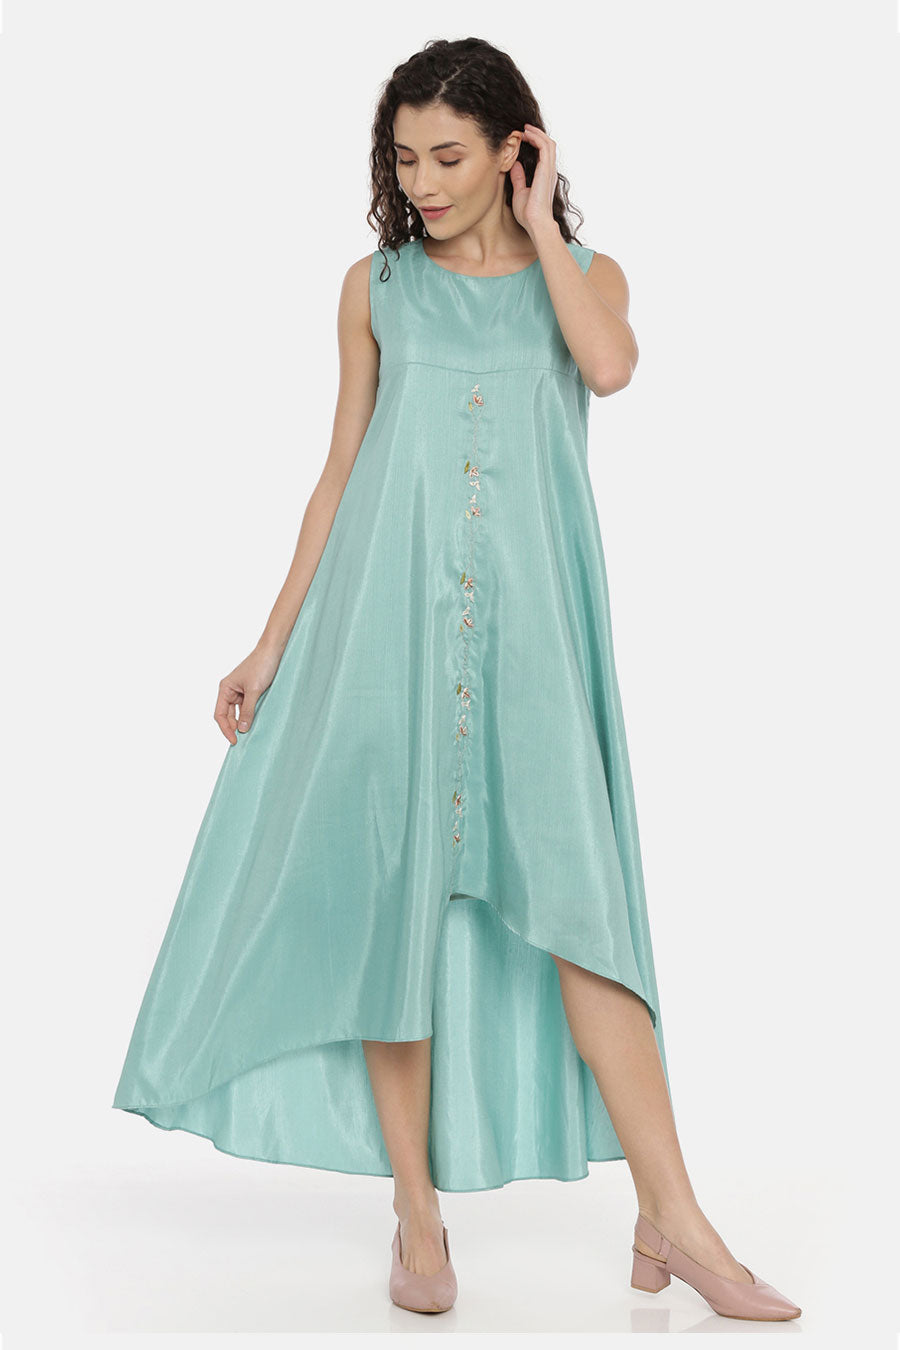 Aqua Blue Asymmetrical Dress